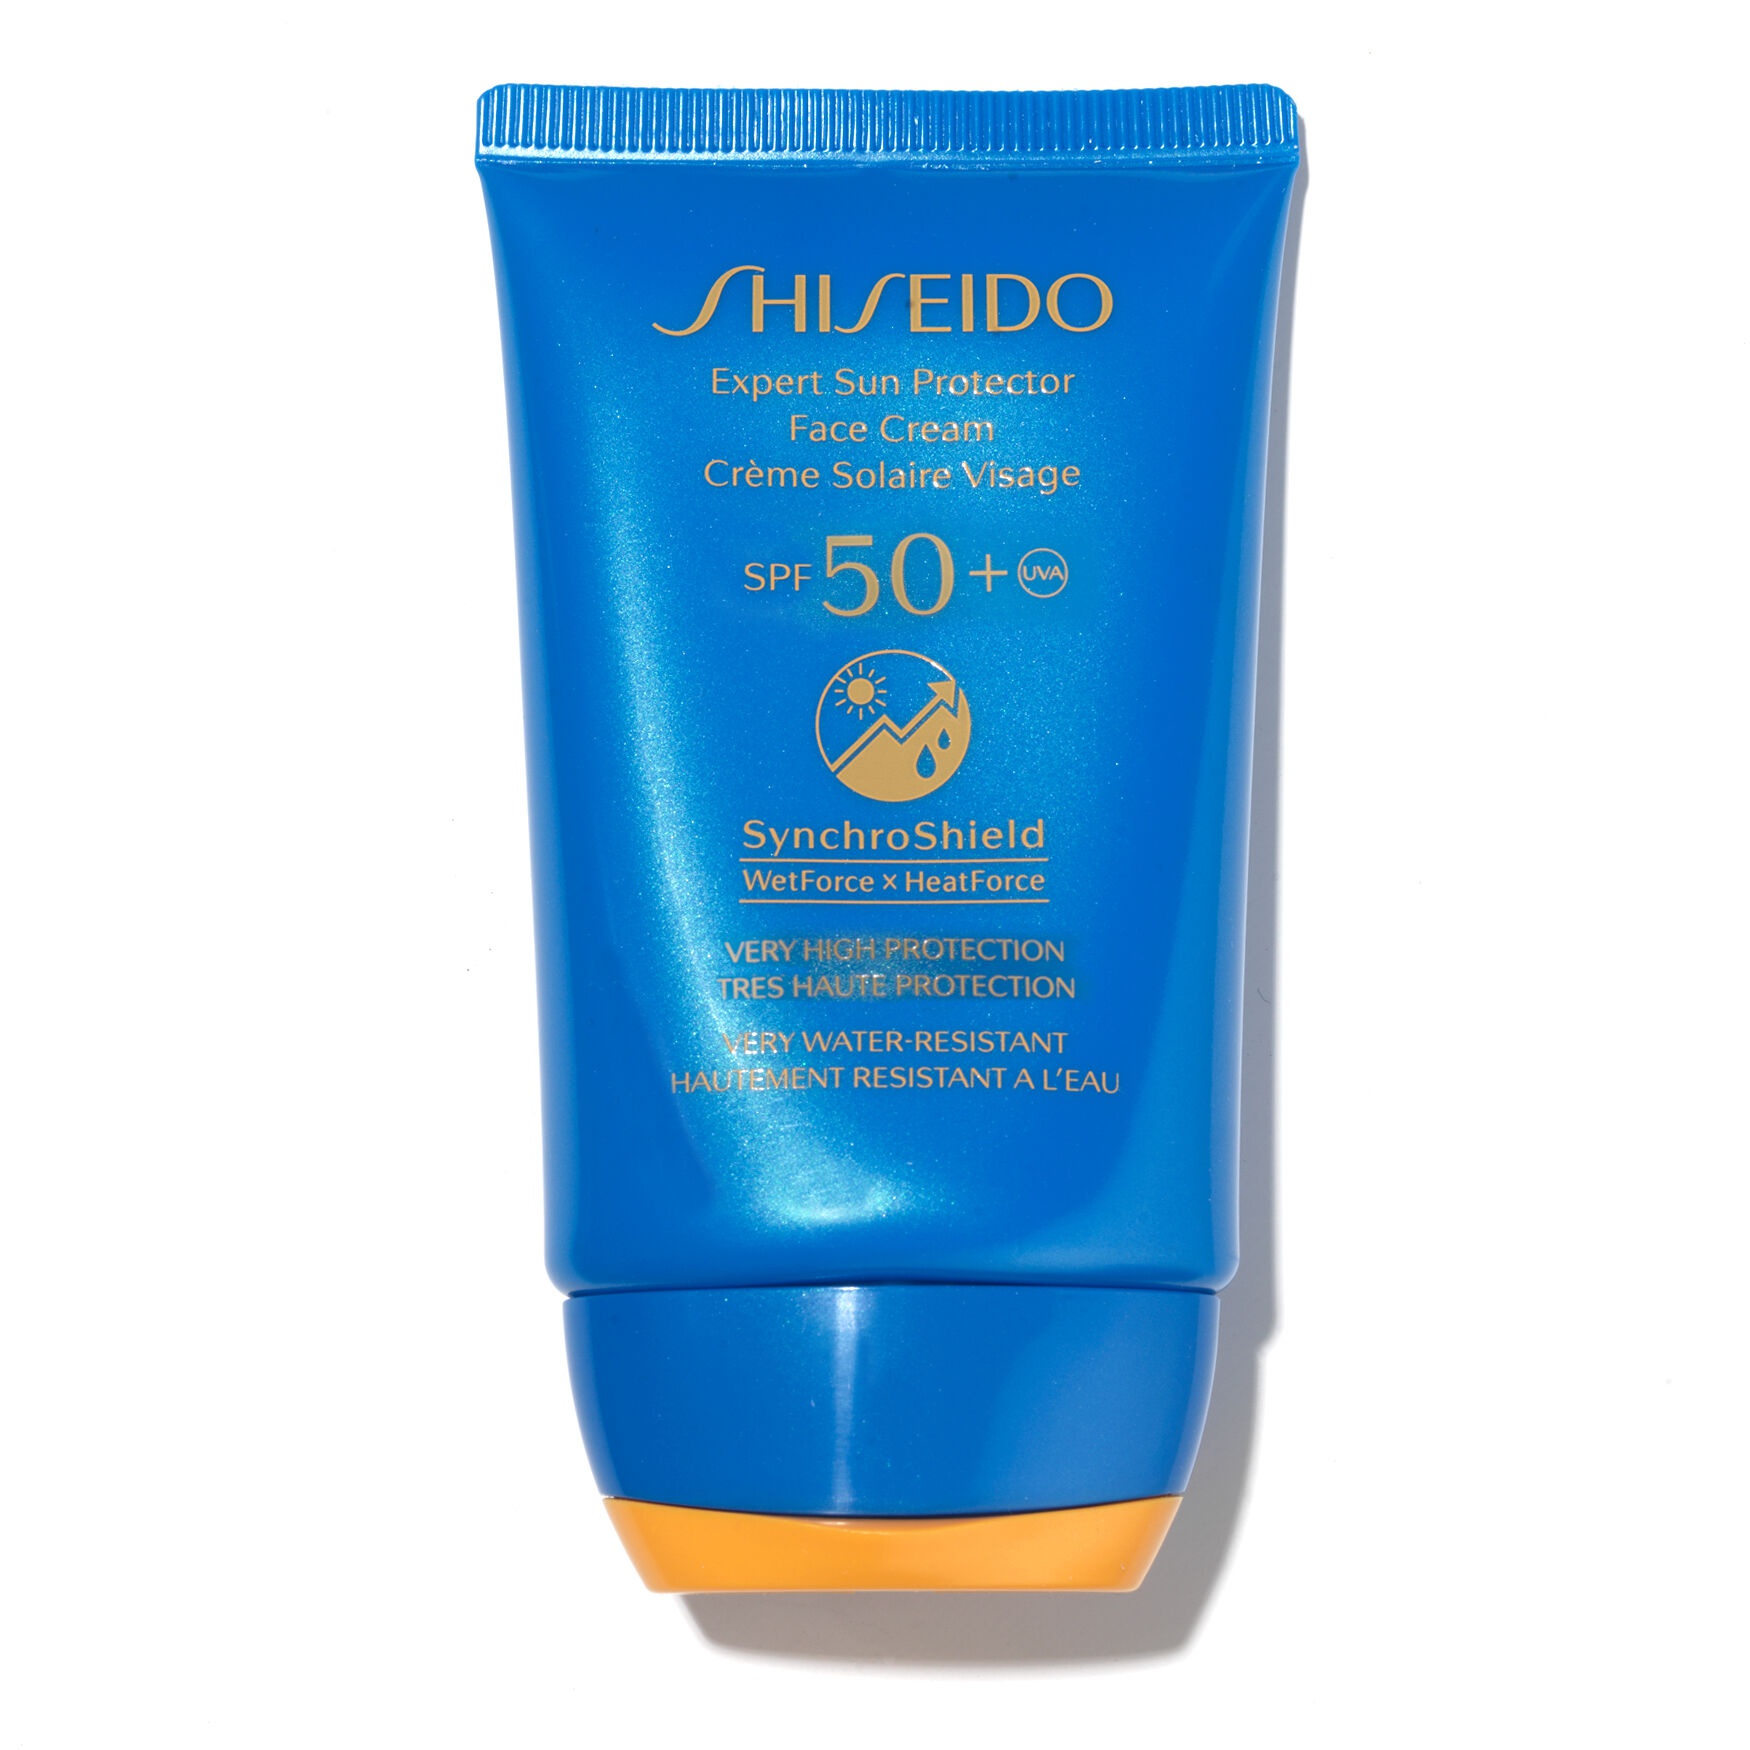 Shiseido Expert Sun Protector Face Cream SPF 50+ ingredients (Explained)